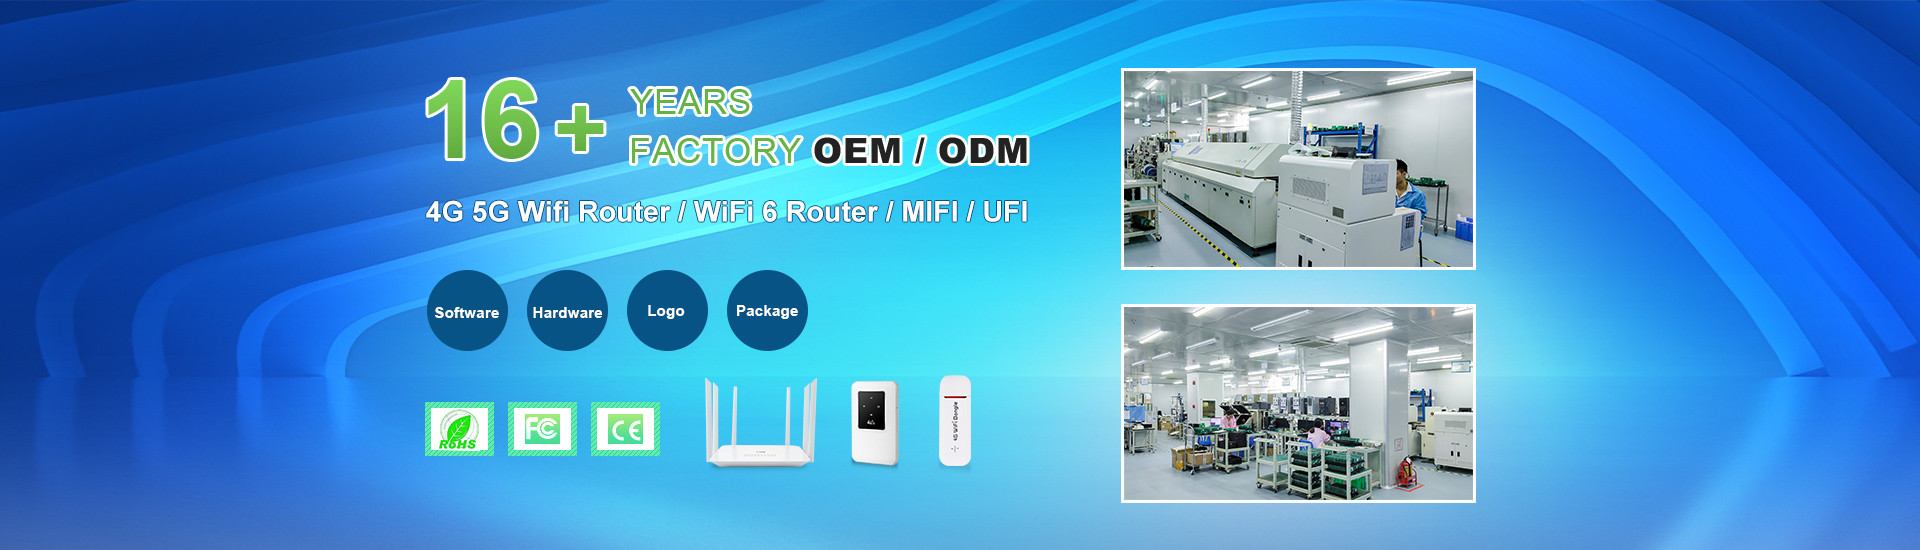 calidad Router de WiFi LTE fábrica